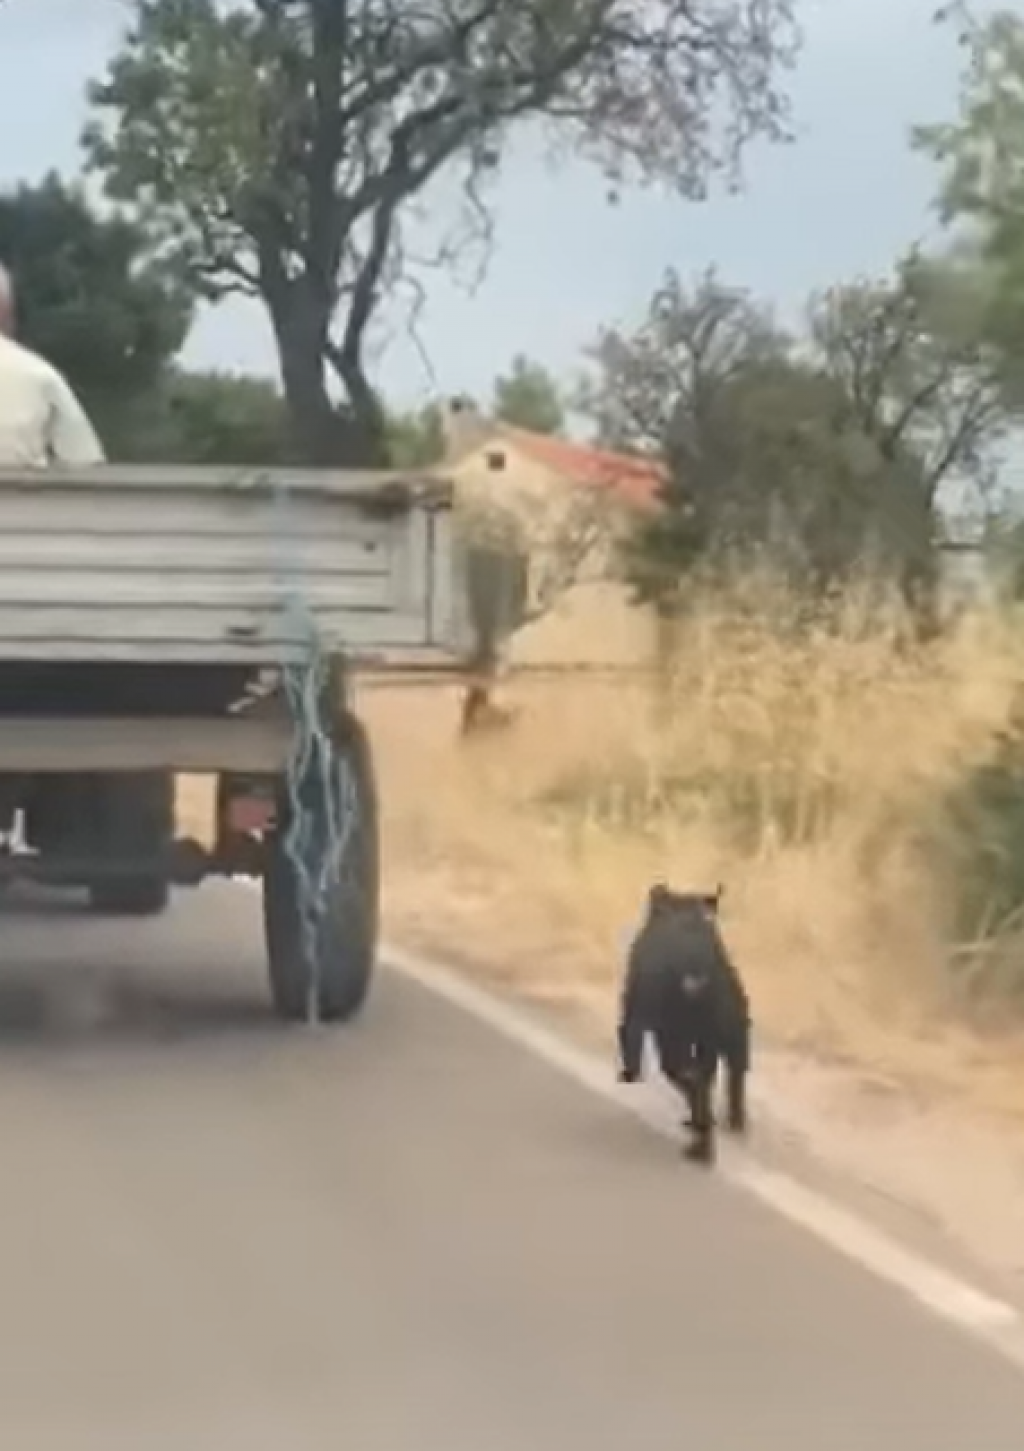 pas je bio zavezan za traktor